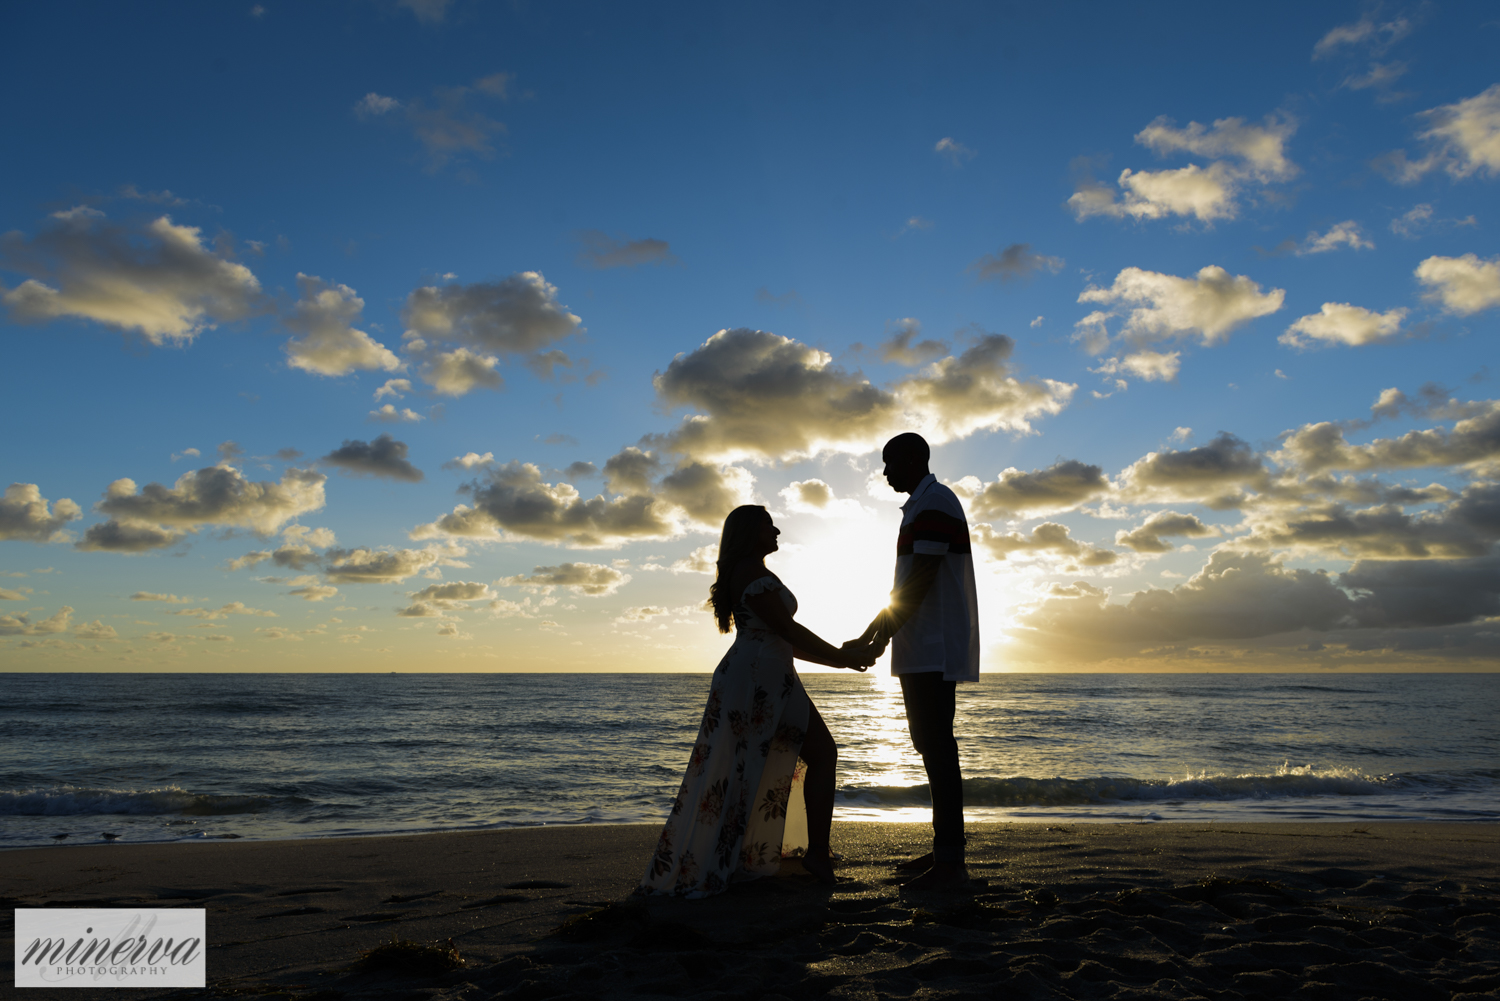 003_engagement-portrait-beach_wedding-photography_worth-ave-clocktower_west-palm-beach_south-florida_orlando_photographer